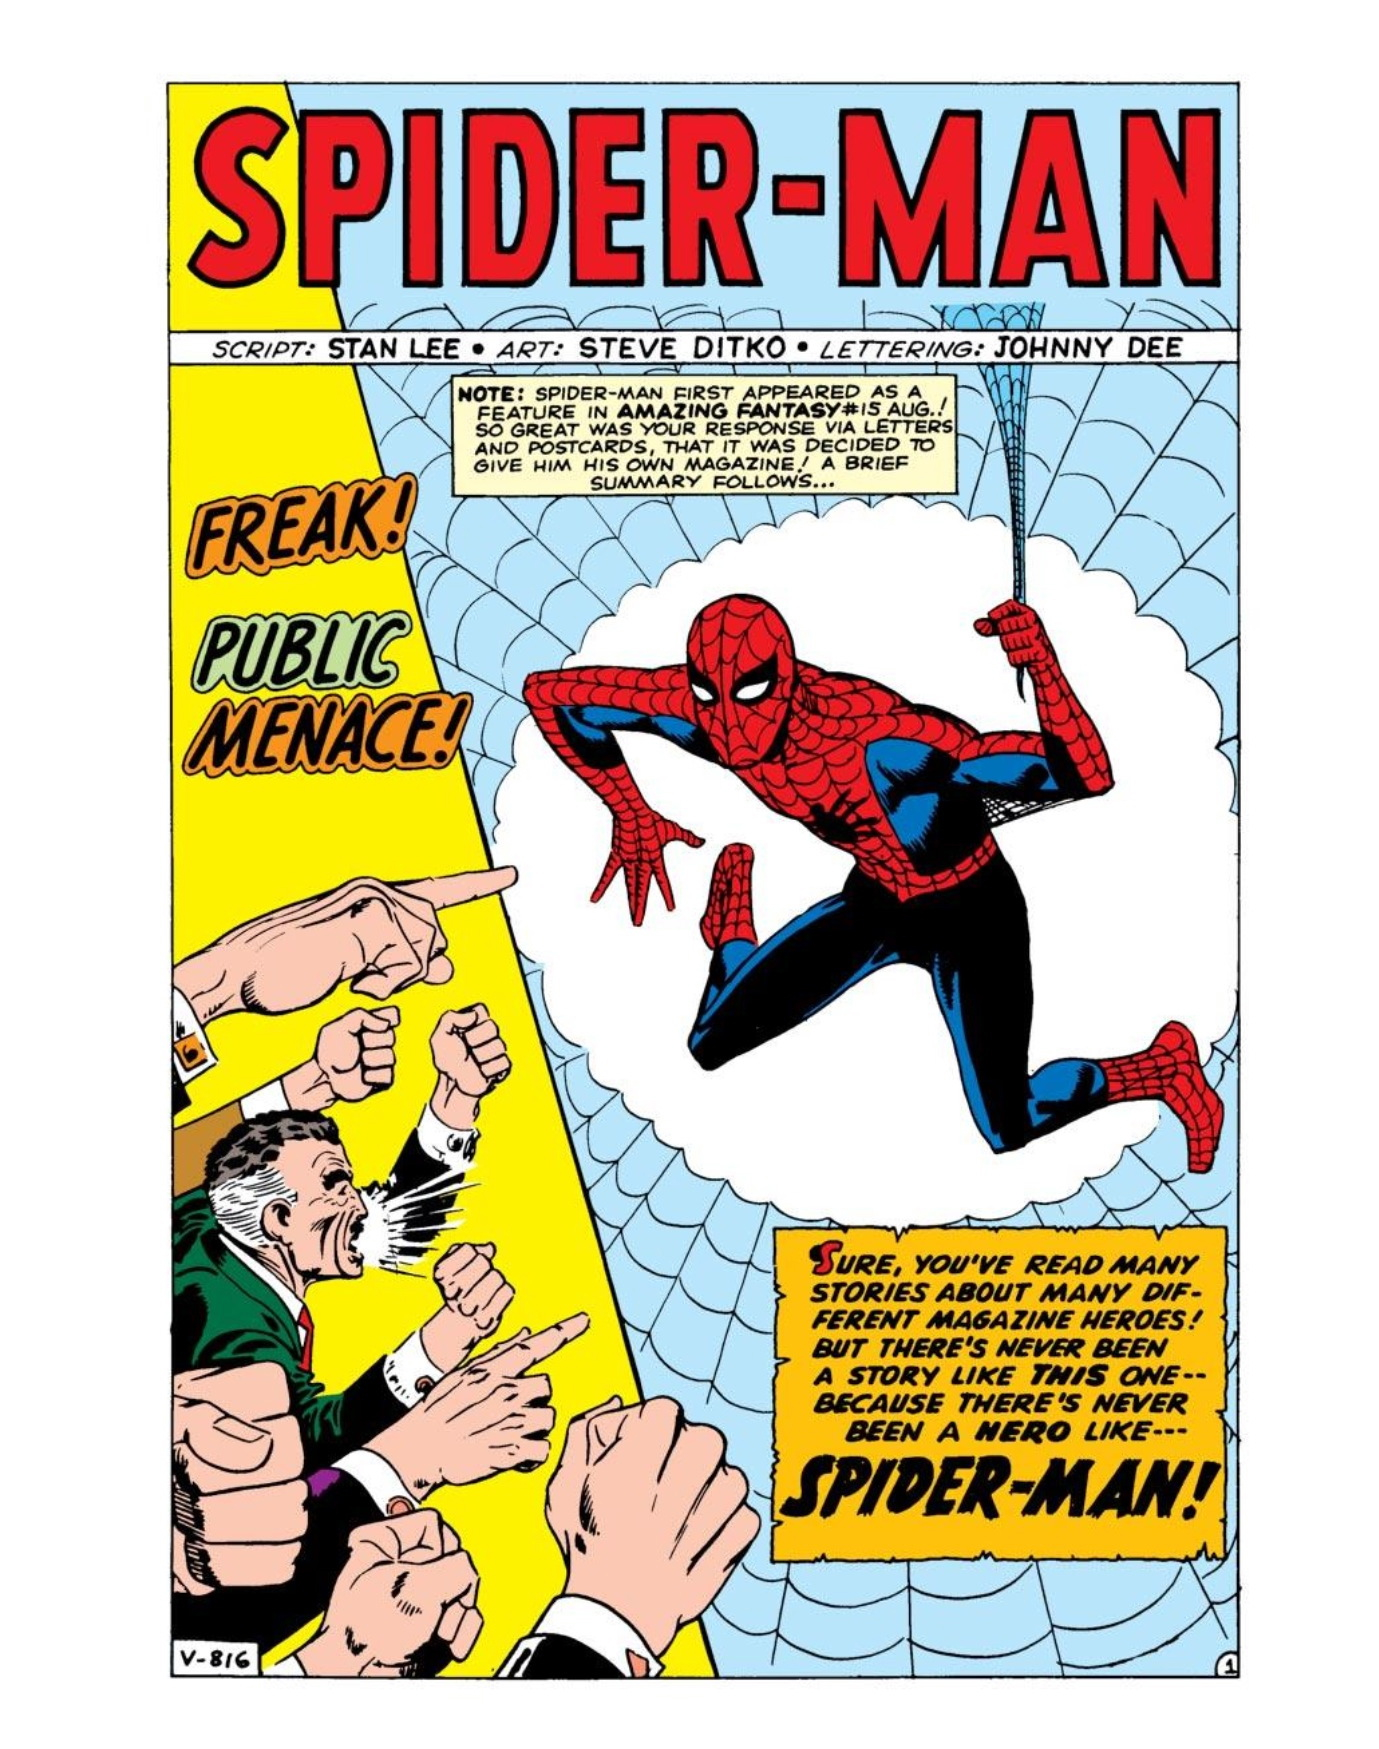 Postcard The Art Of Vintage Marvel Comics The Amazing Spider-Man #16 